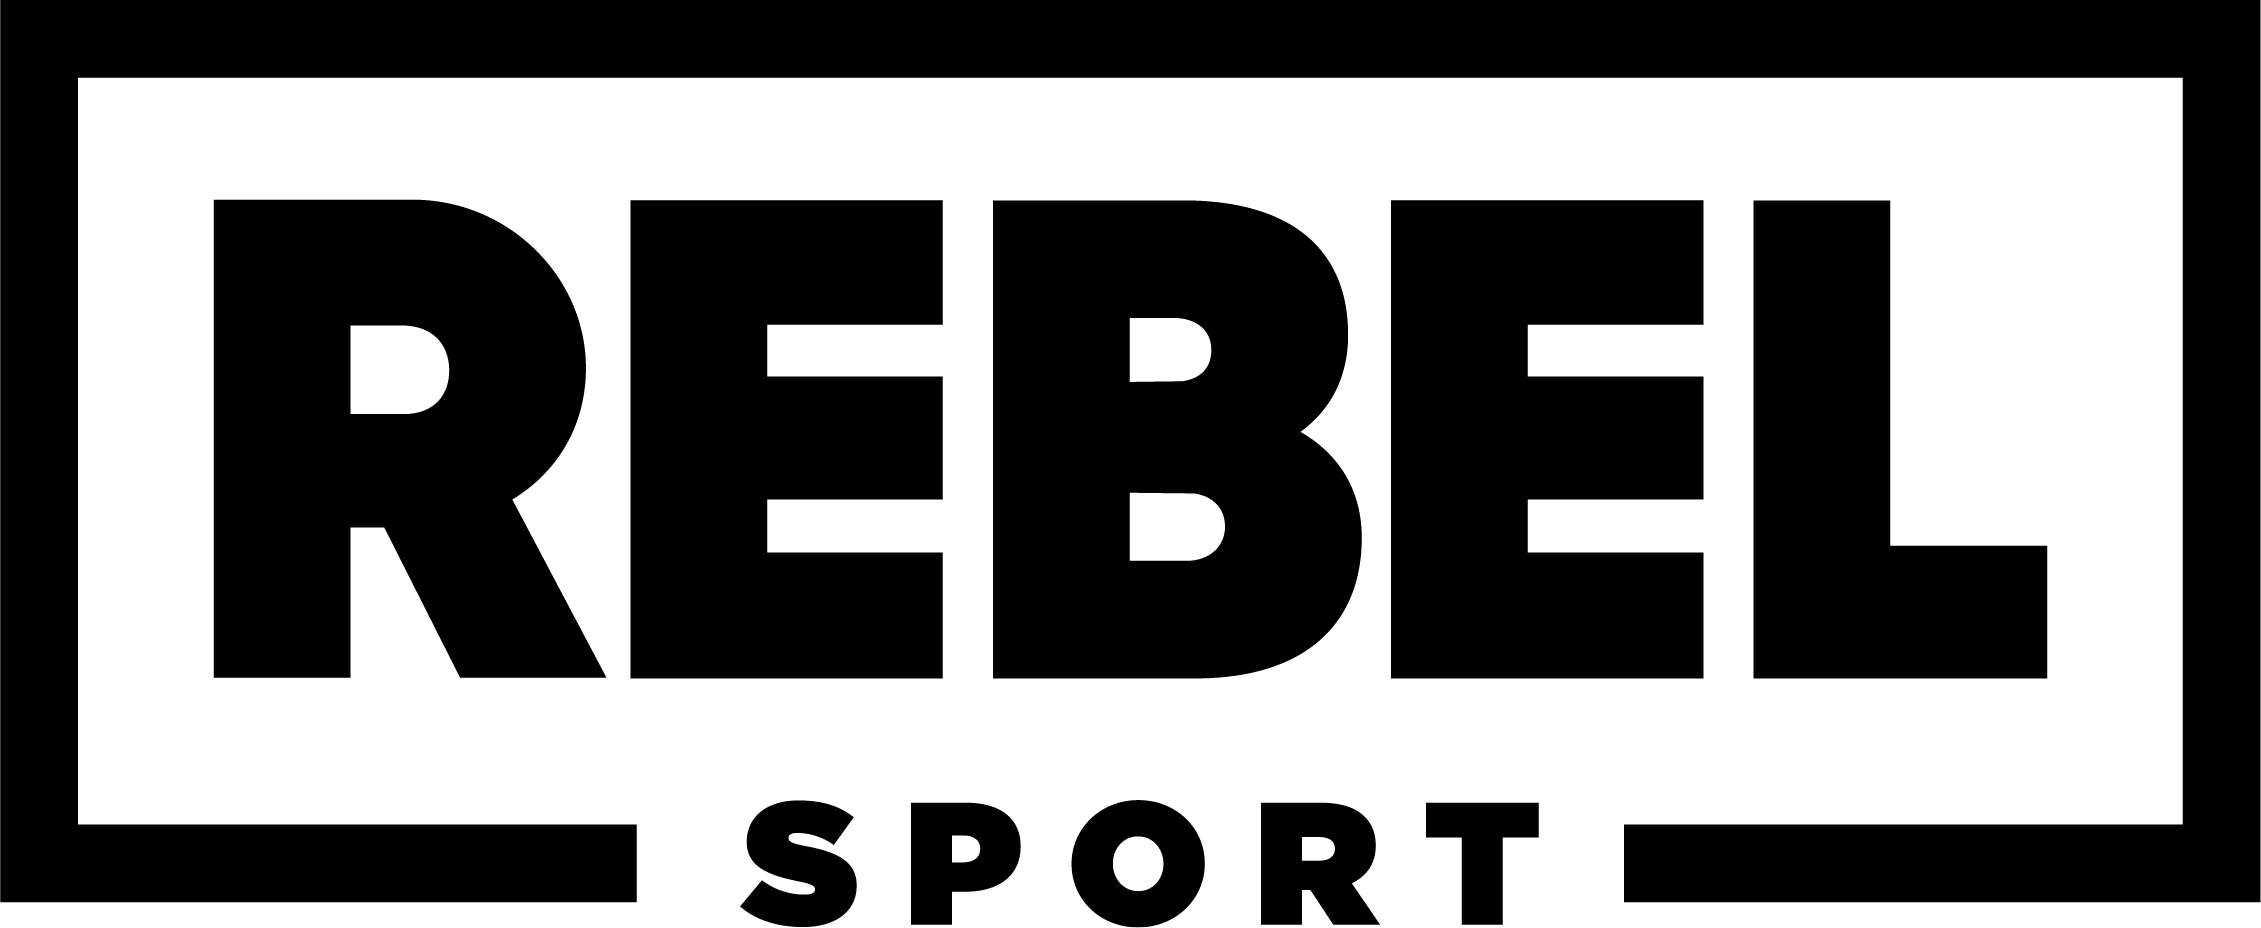 Sports Gear & Equipment - Shop Online with Rebel Sport